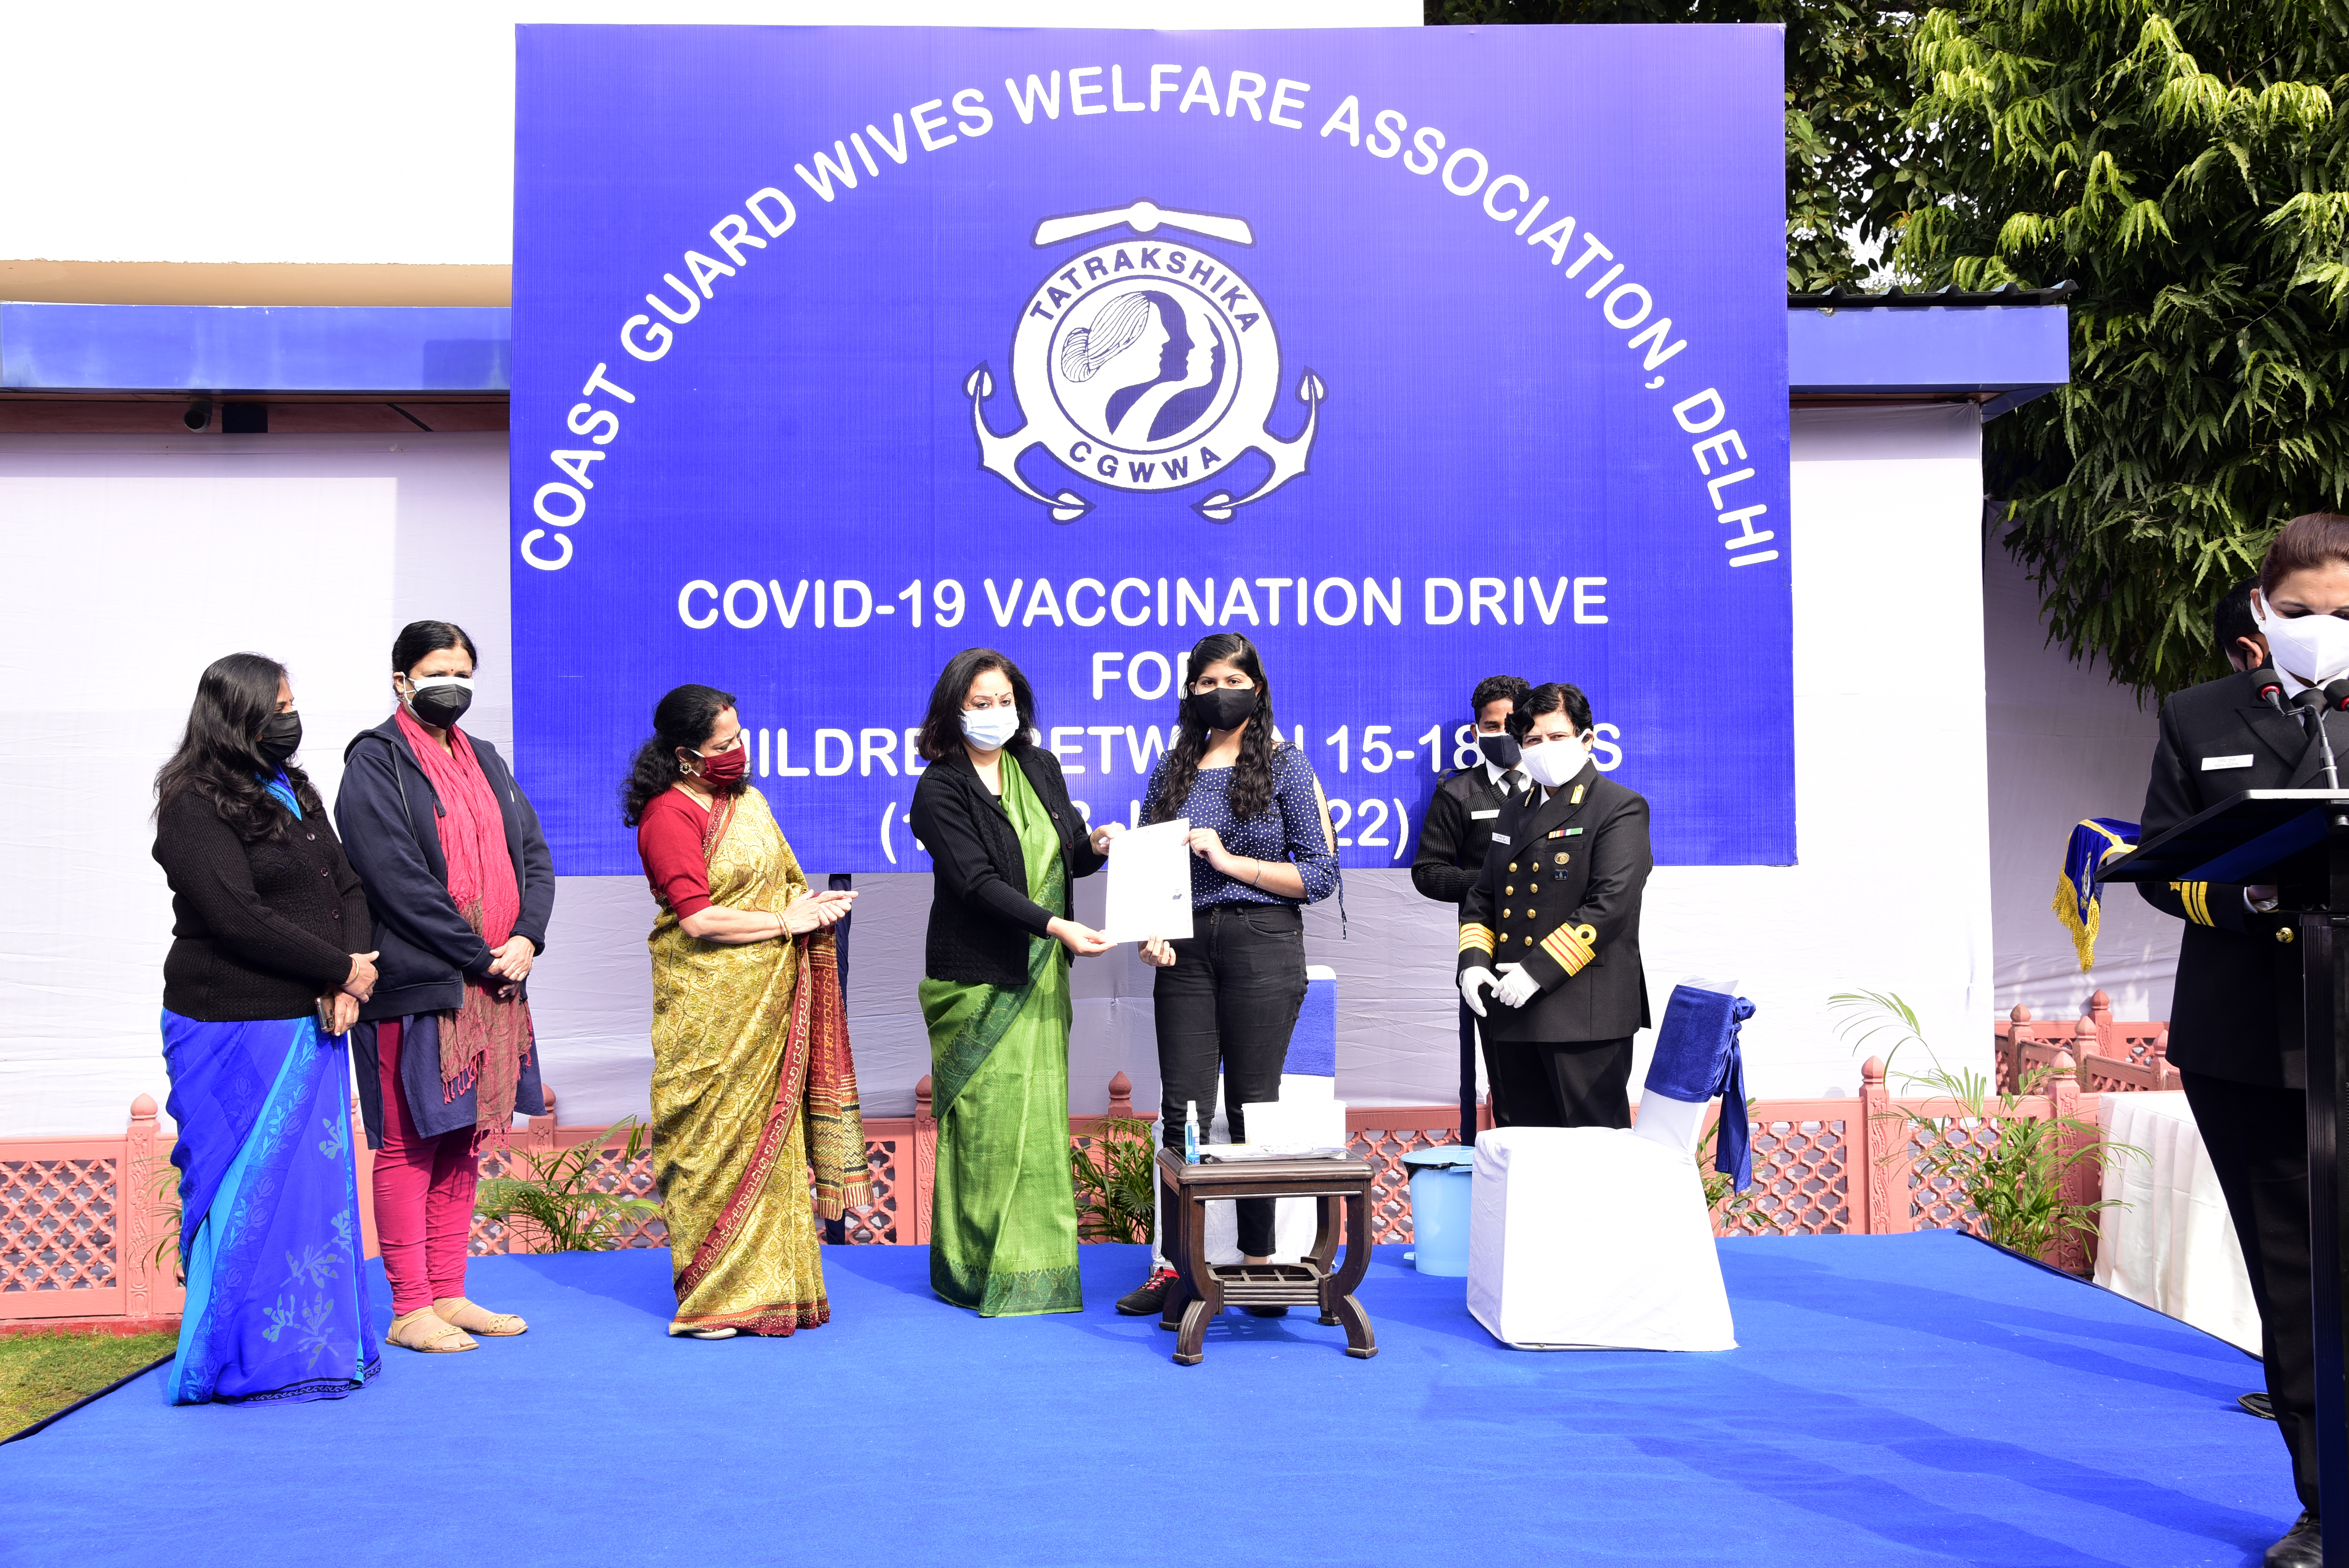 CGWWA Vaccination Drive